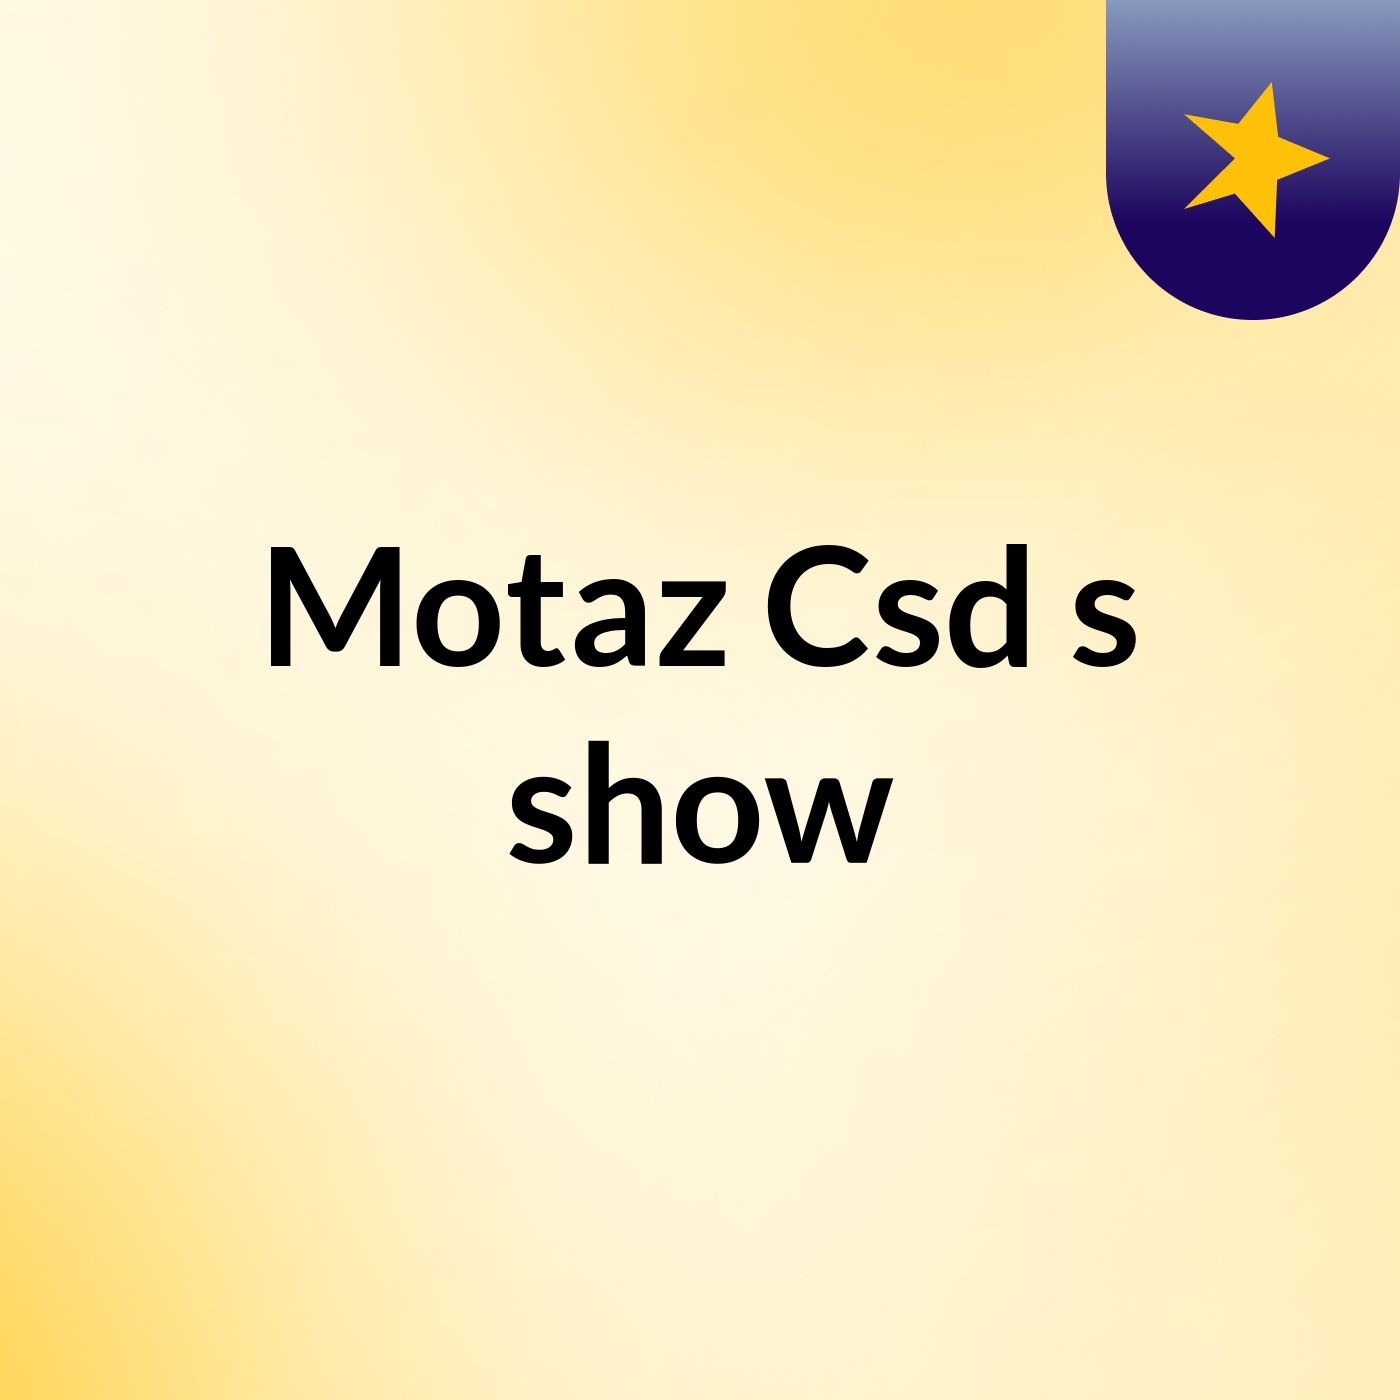 Motaz Csd's show